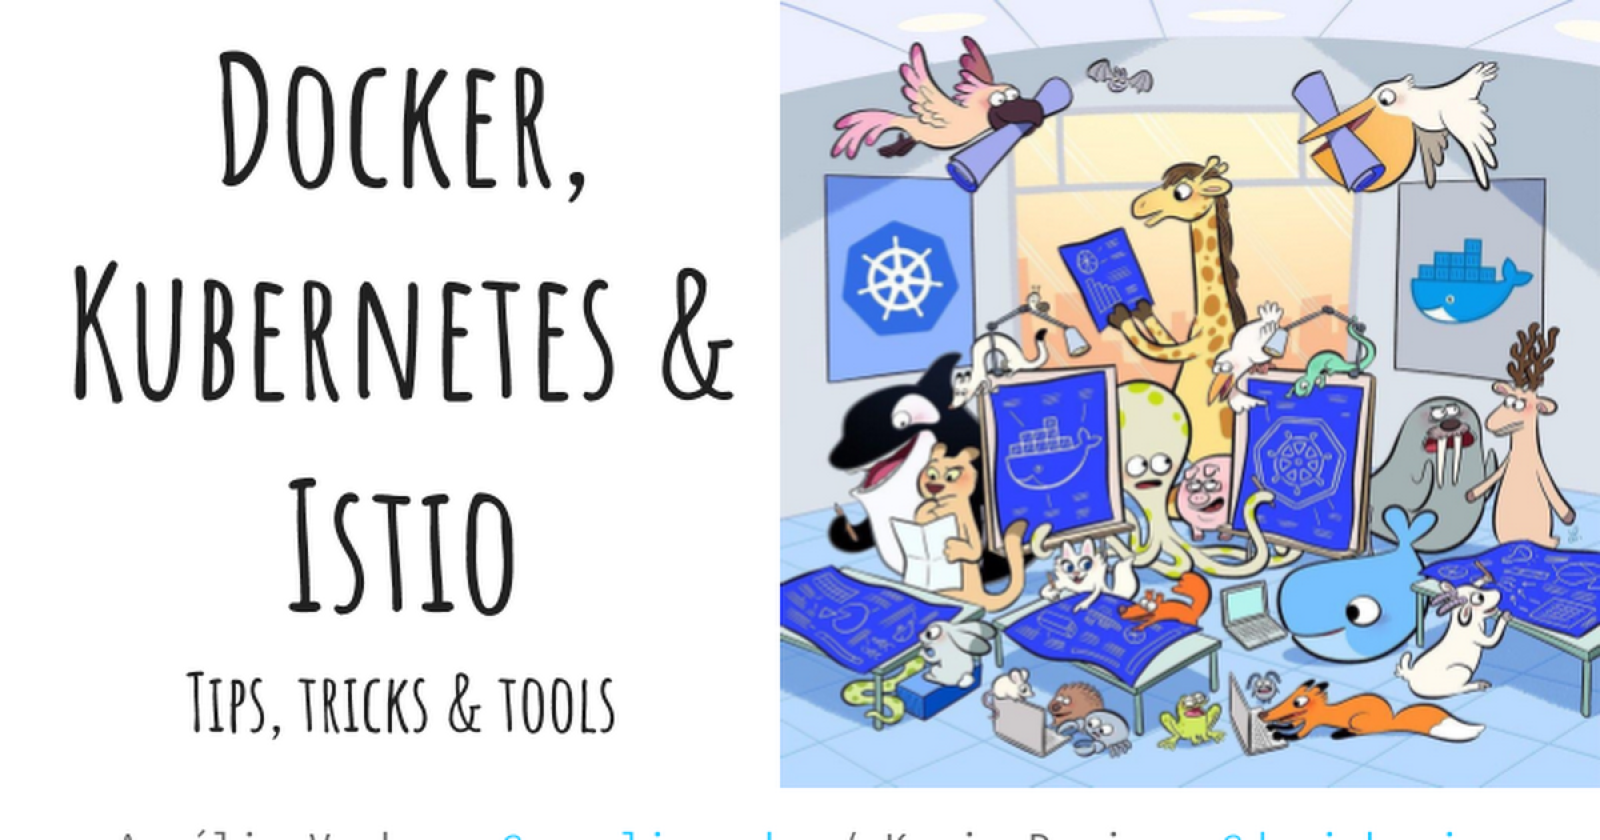 Docker, Kubernetes & Istio : Tips, tricks & tools